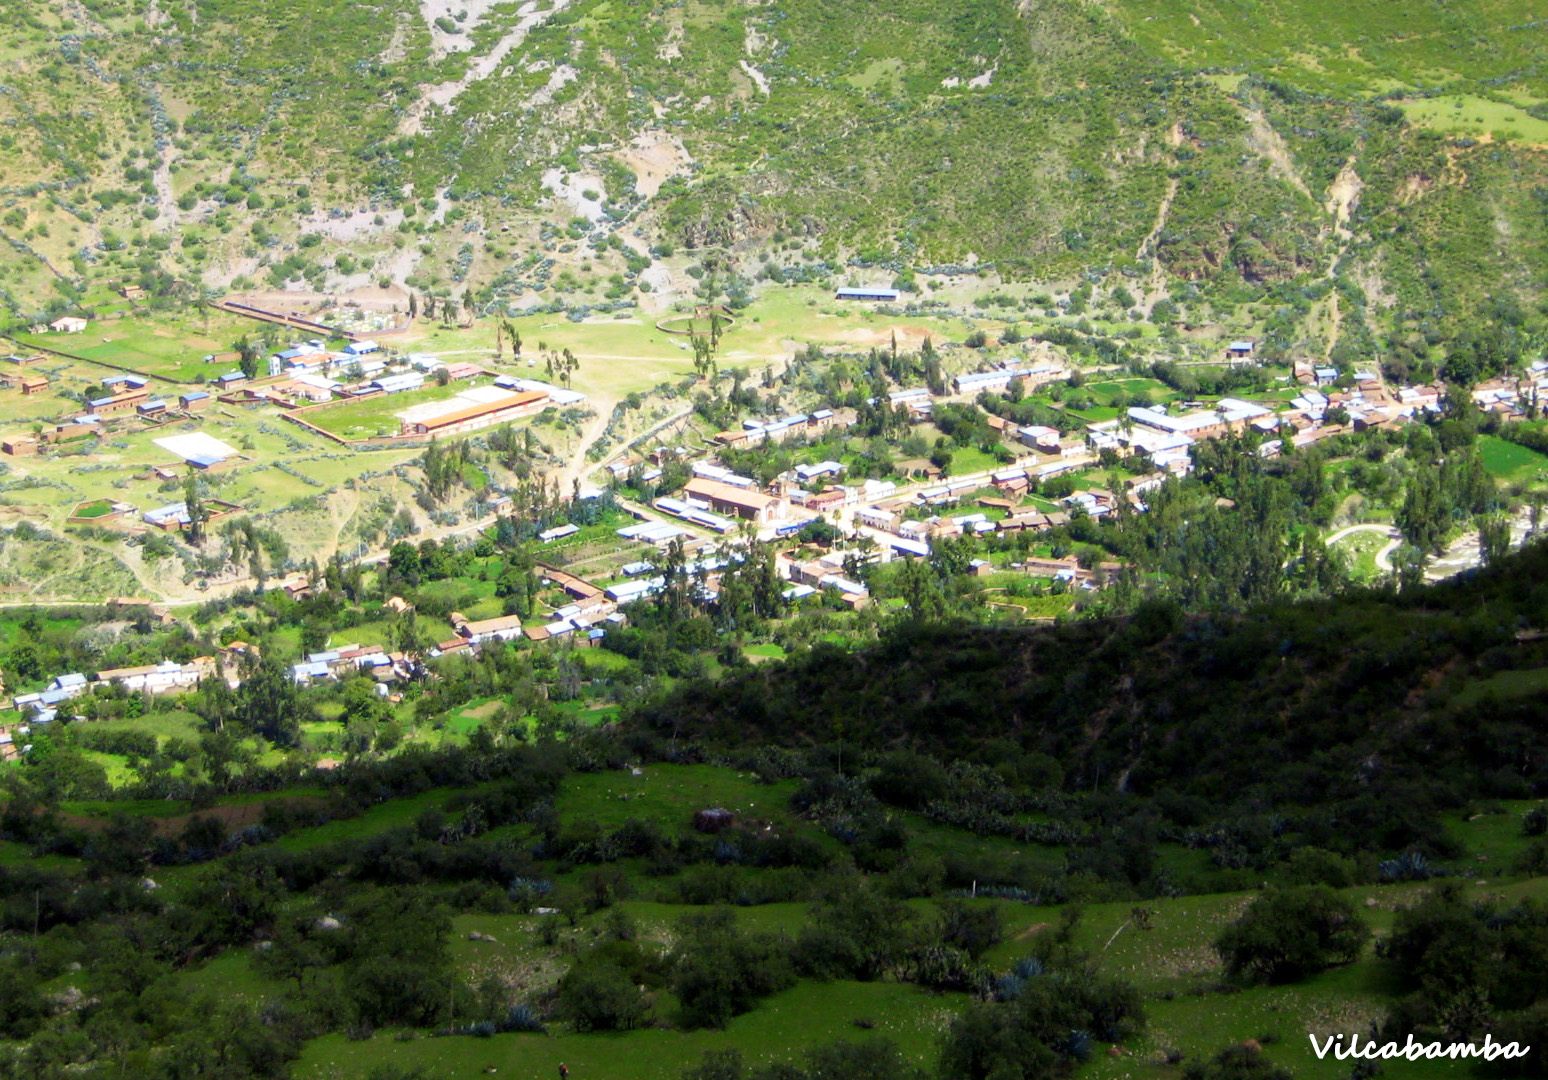 Valle de Vilcabamba